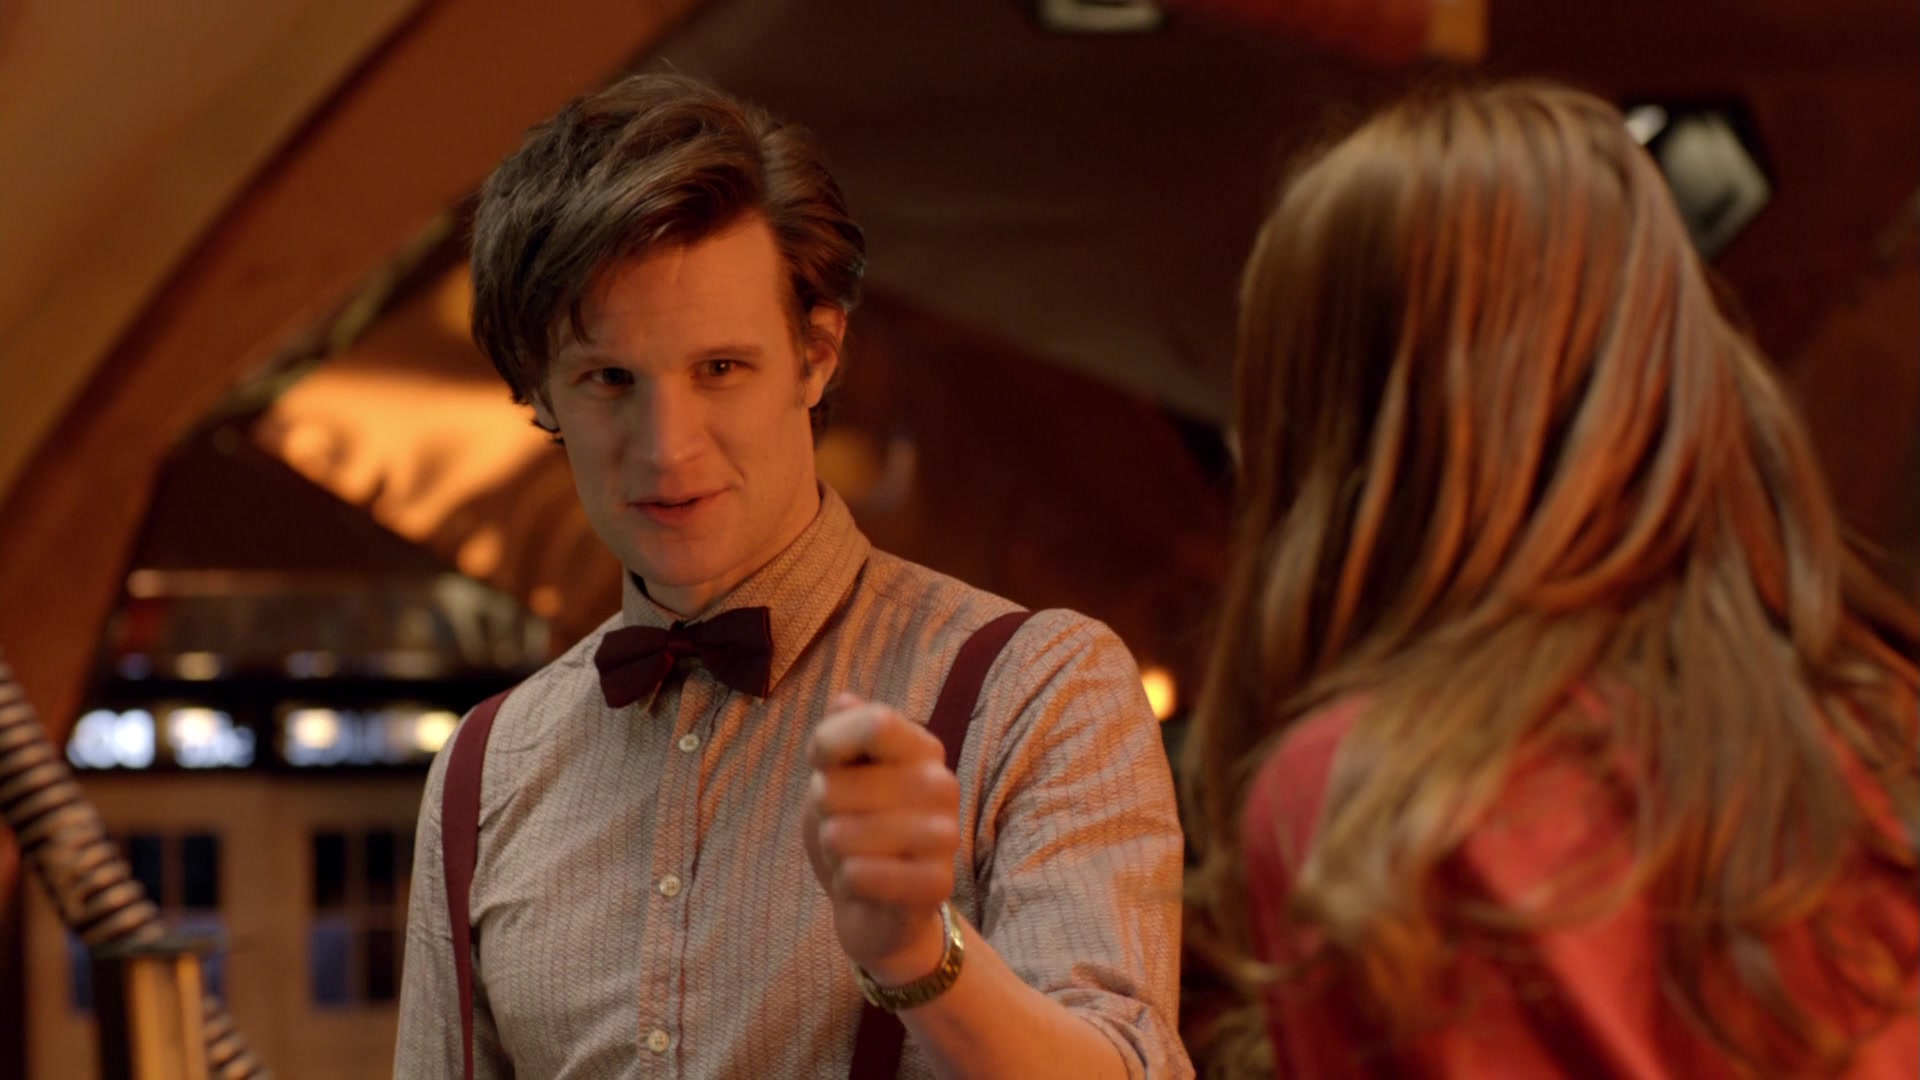 The Eleventh Doctor (Matt Smith) talks to Amy Pond (Karen Gillan) inside his TARDIS